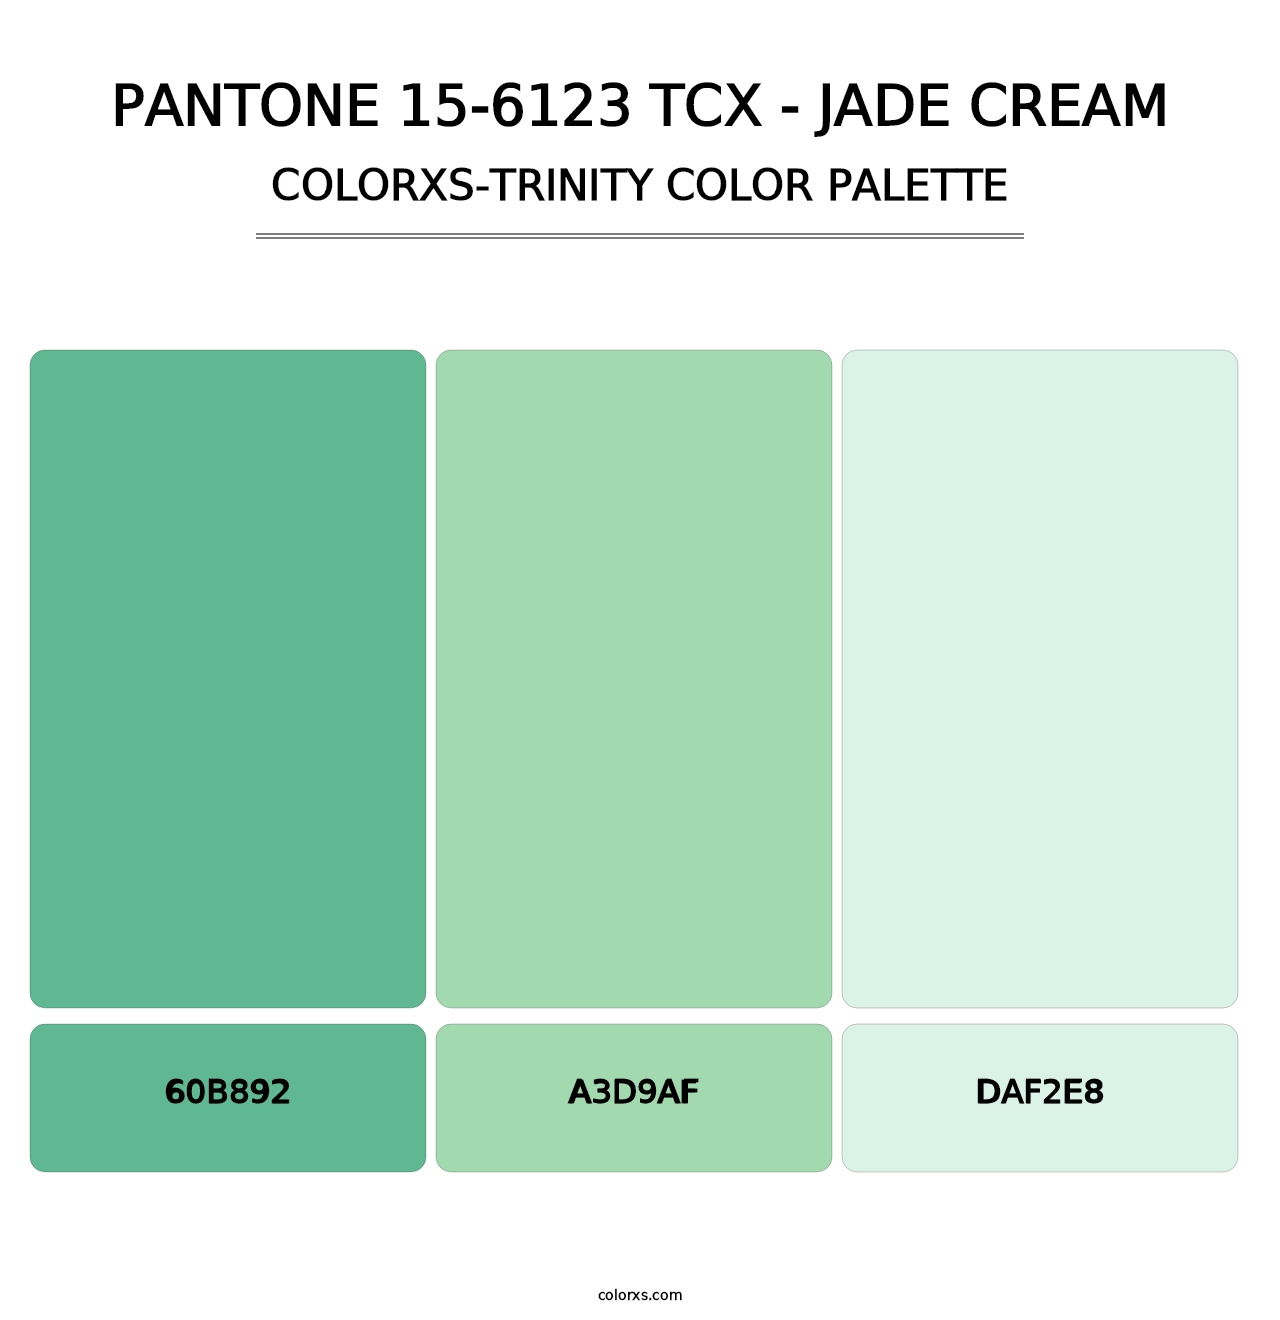 PANTONE 15-6123 TCX - Jade Cream - Colorxs Trinity Palette